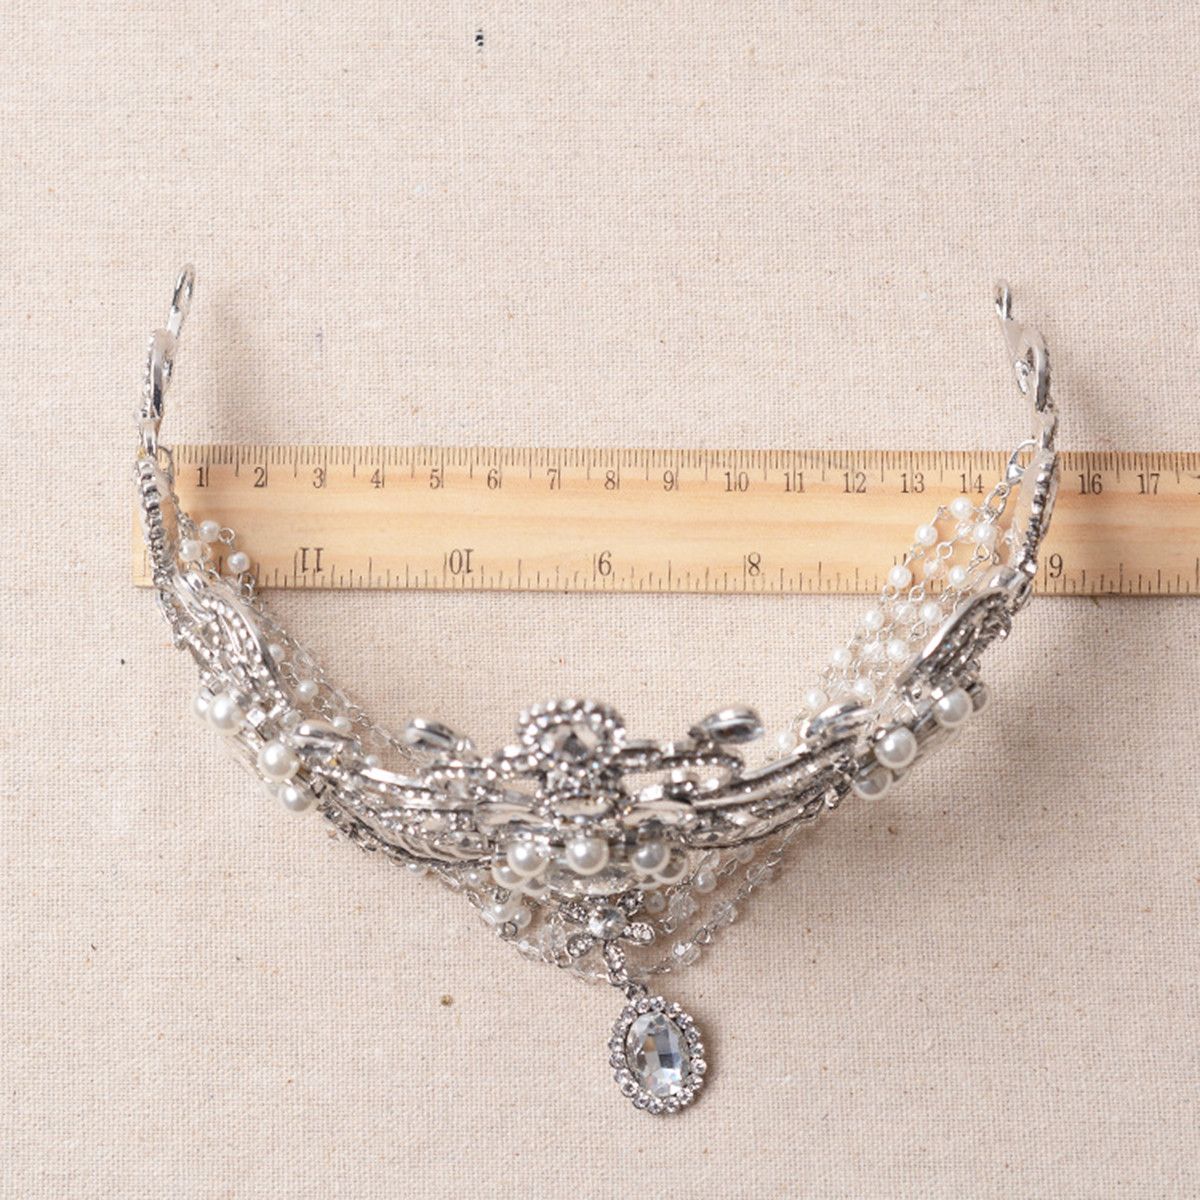 Wedding-Headband-Hair-Accessories-Queen-Crown-Bridal-Tiara-Crystal-Pear-1118395